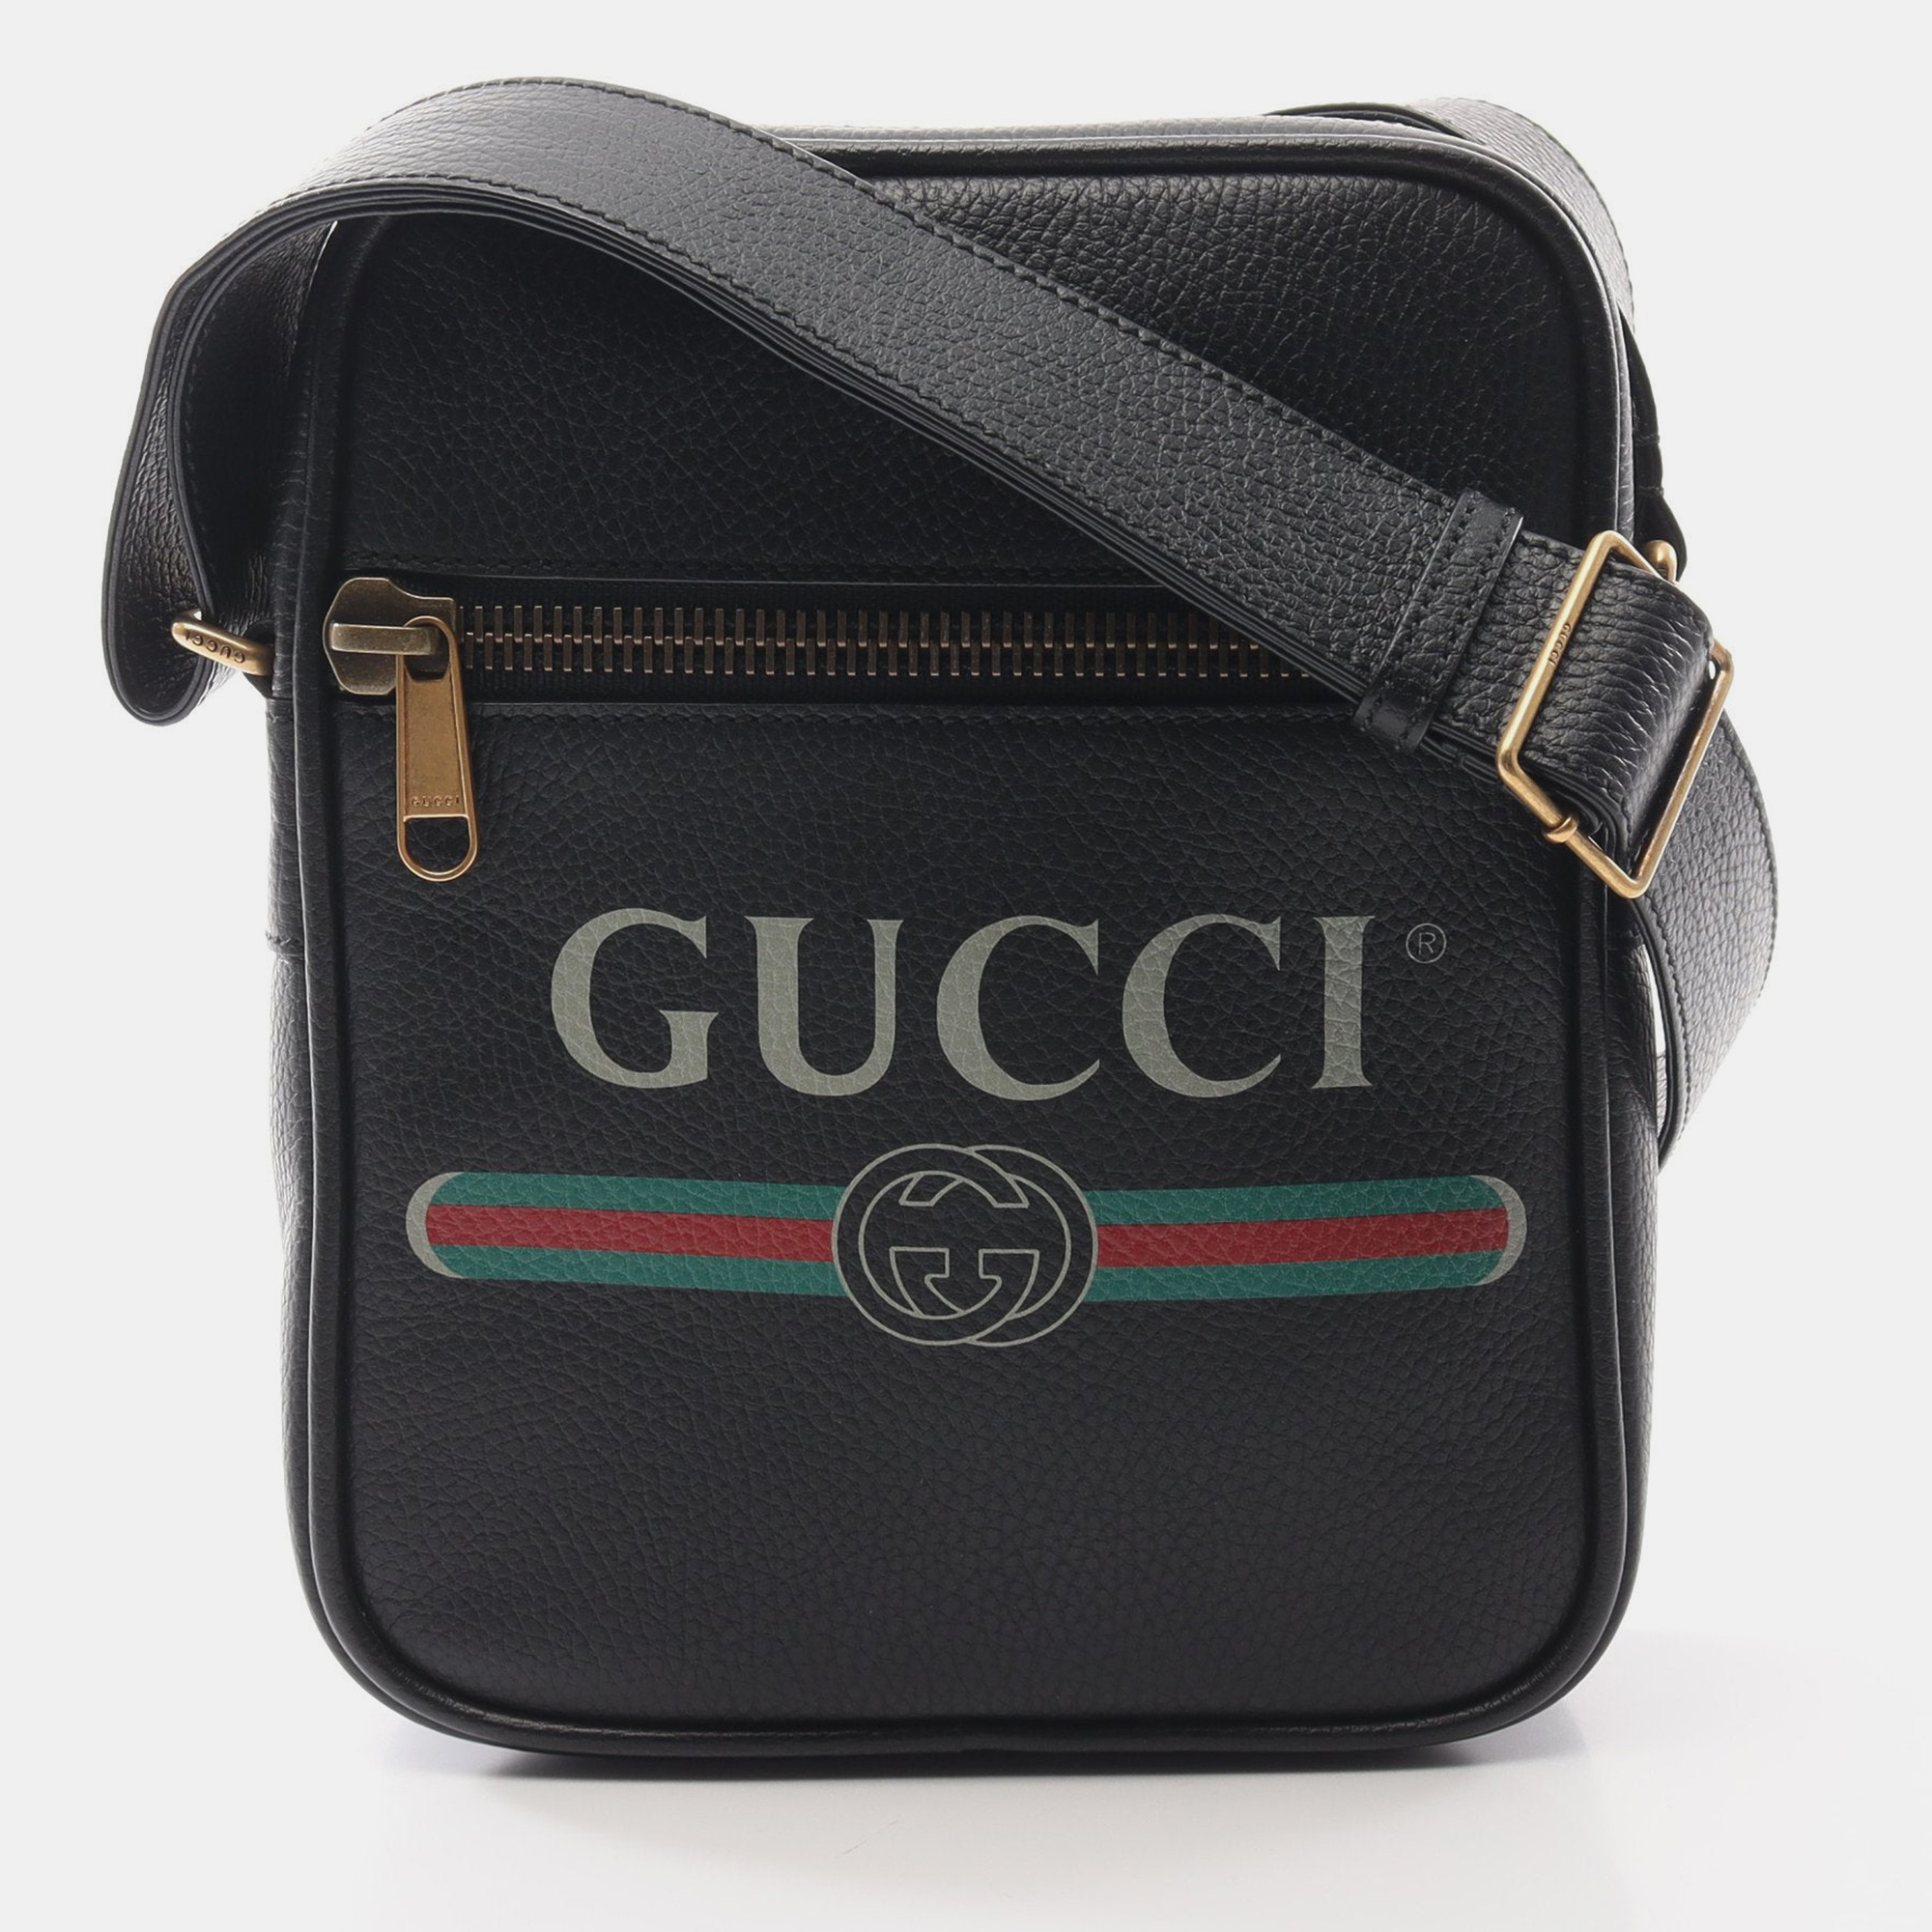 Gucci gucci print shoulder bag leather black multicolor